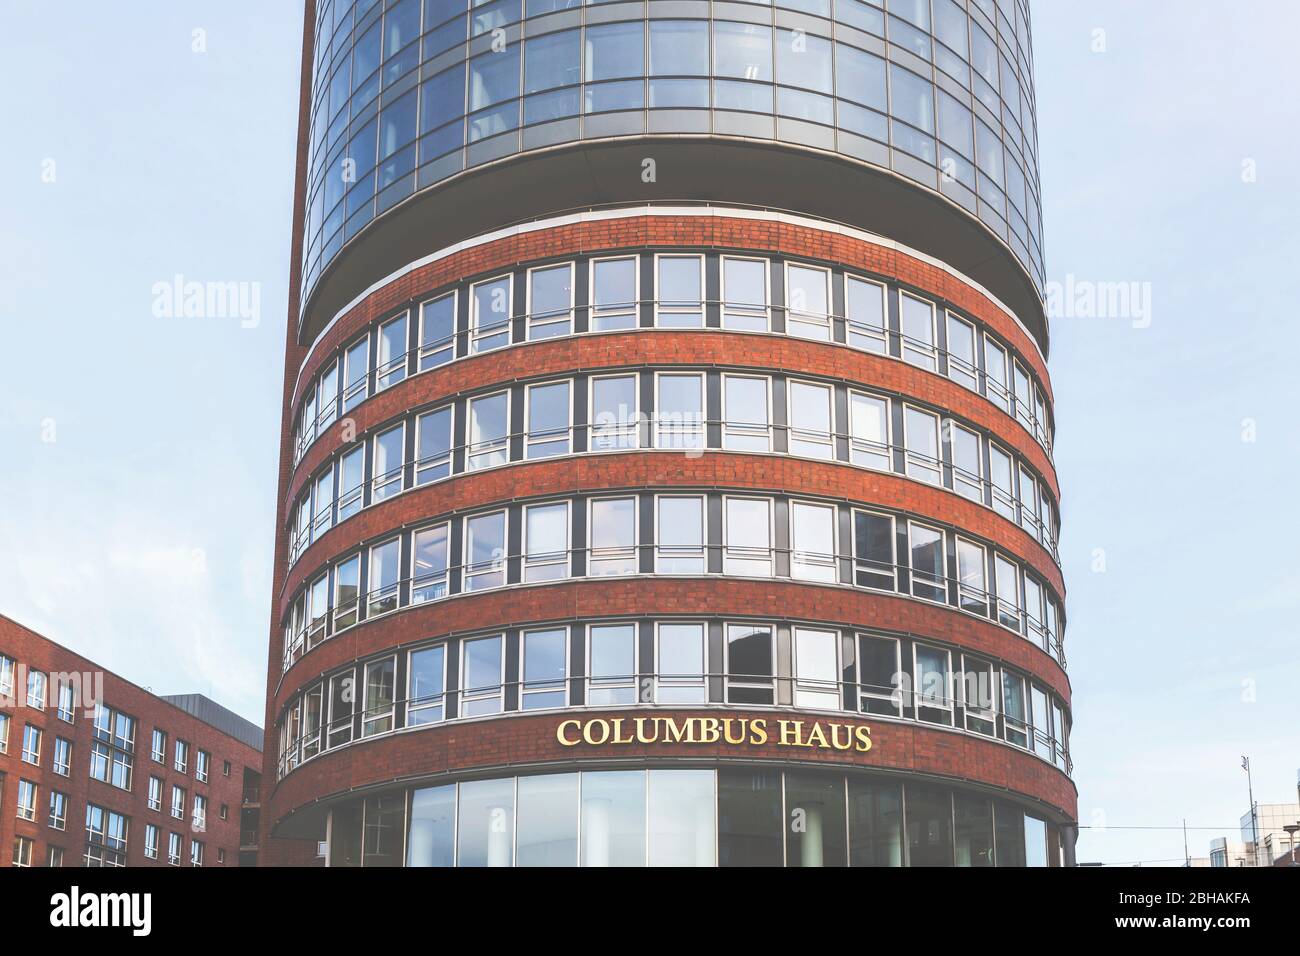 Columbus Haus - a building in Hamburg's Speicherstadt. Stock Photo